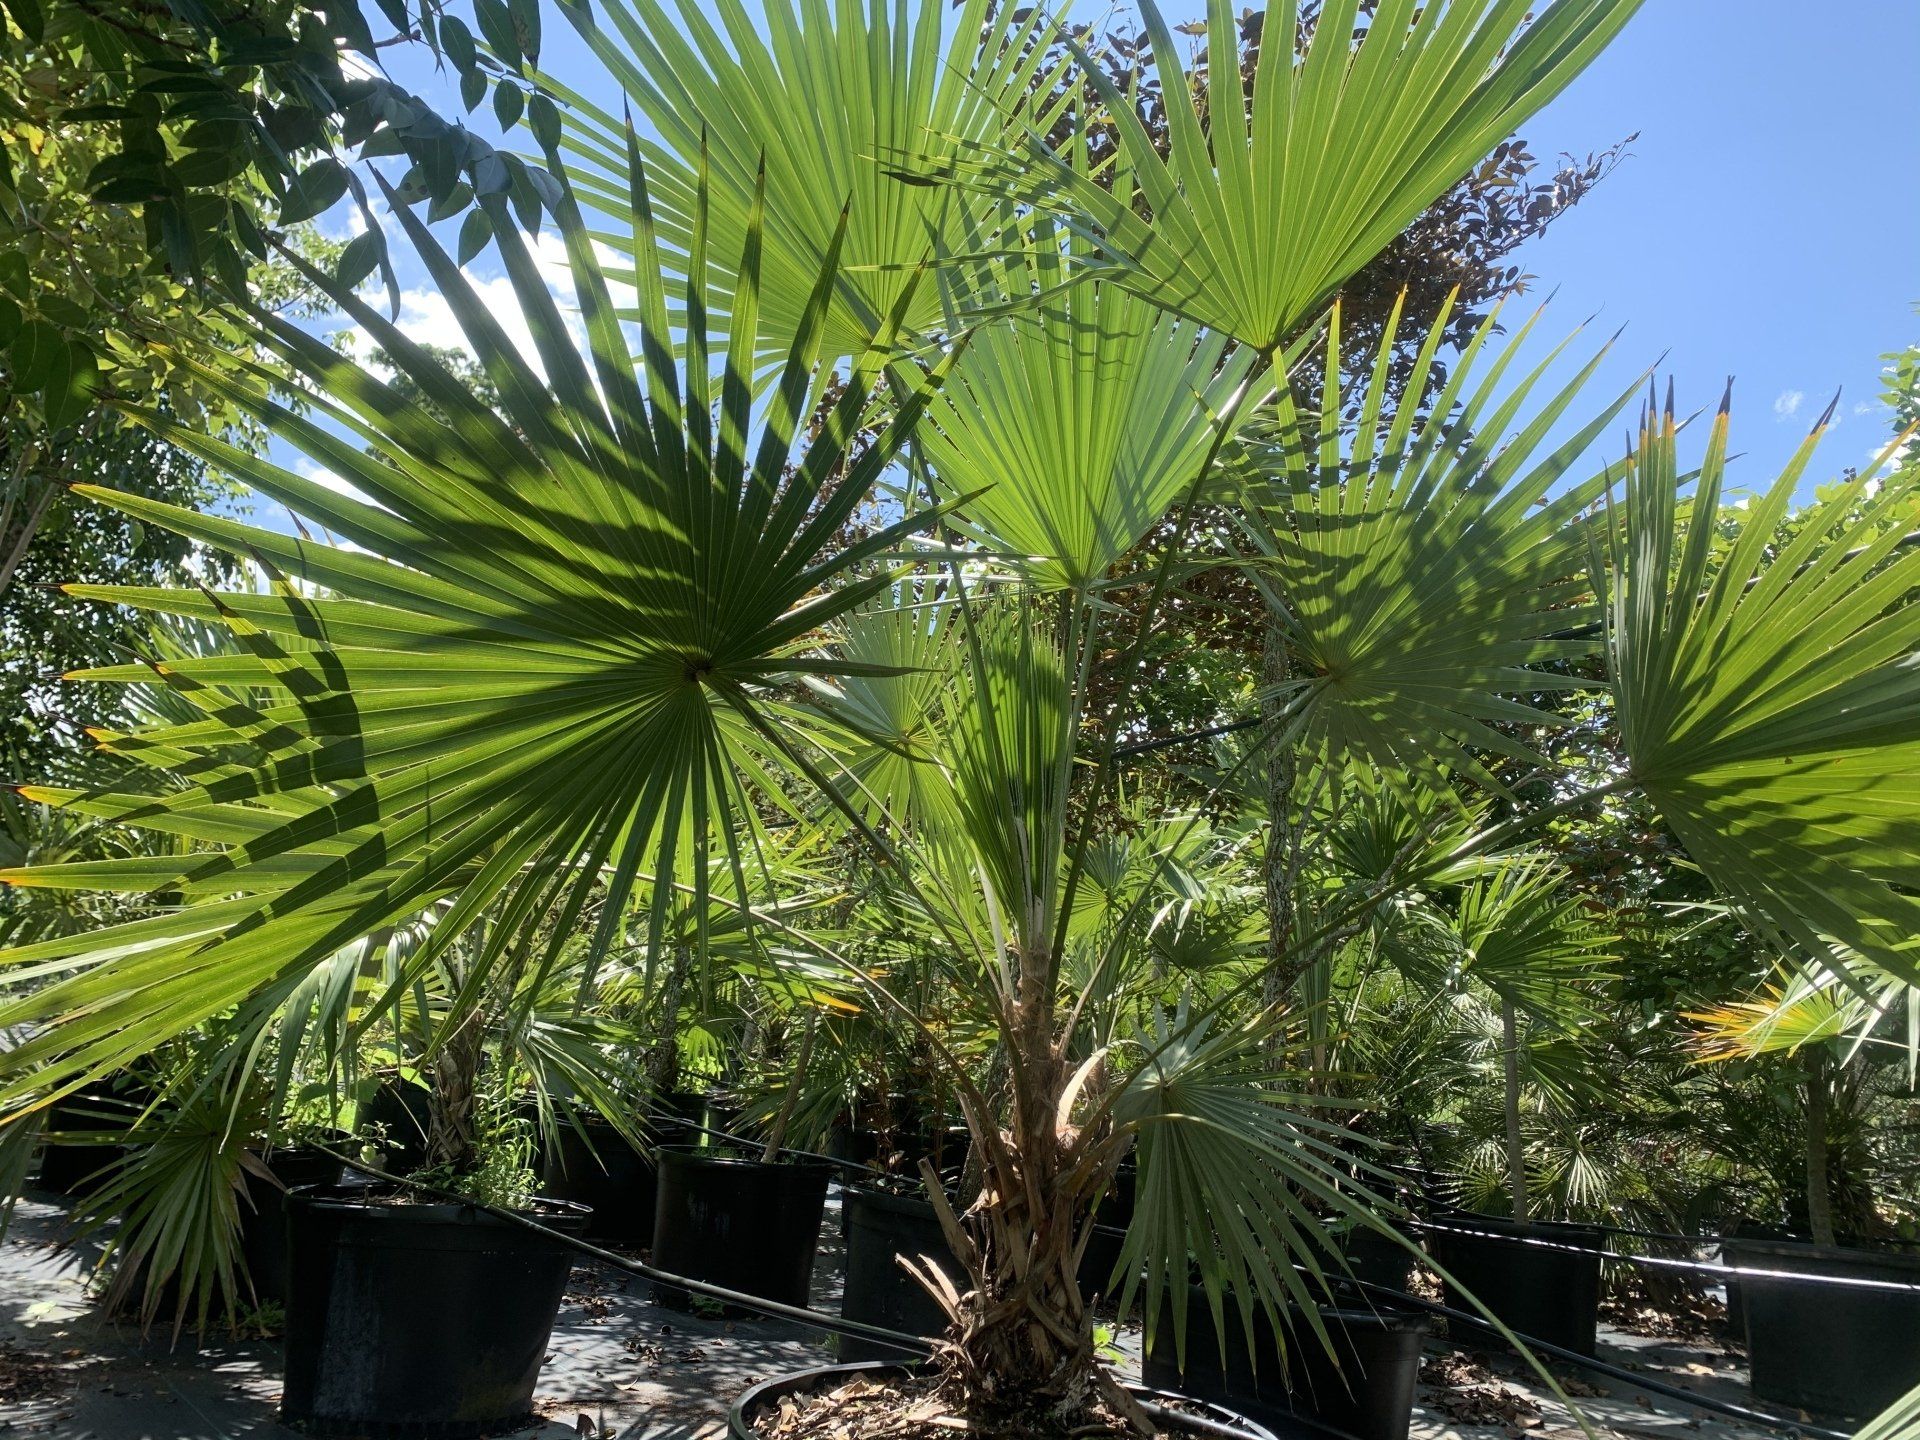 Tropical palms